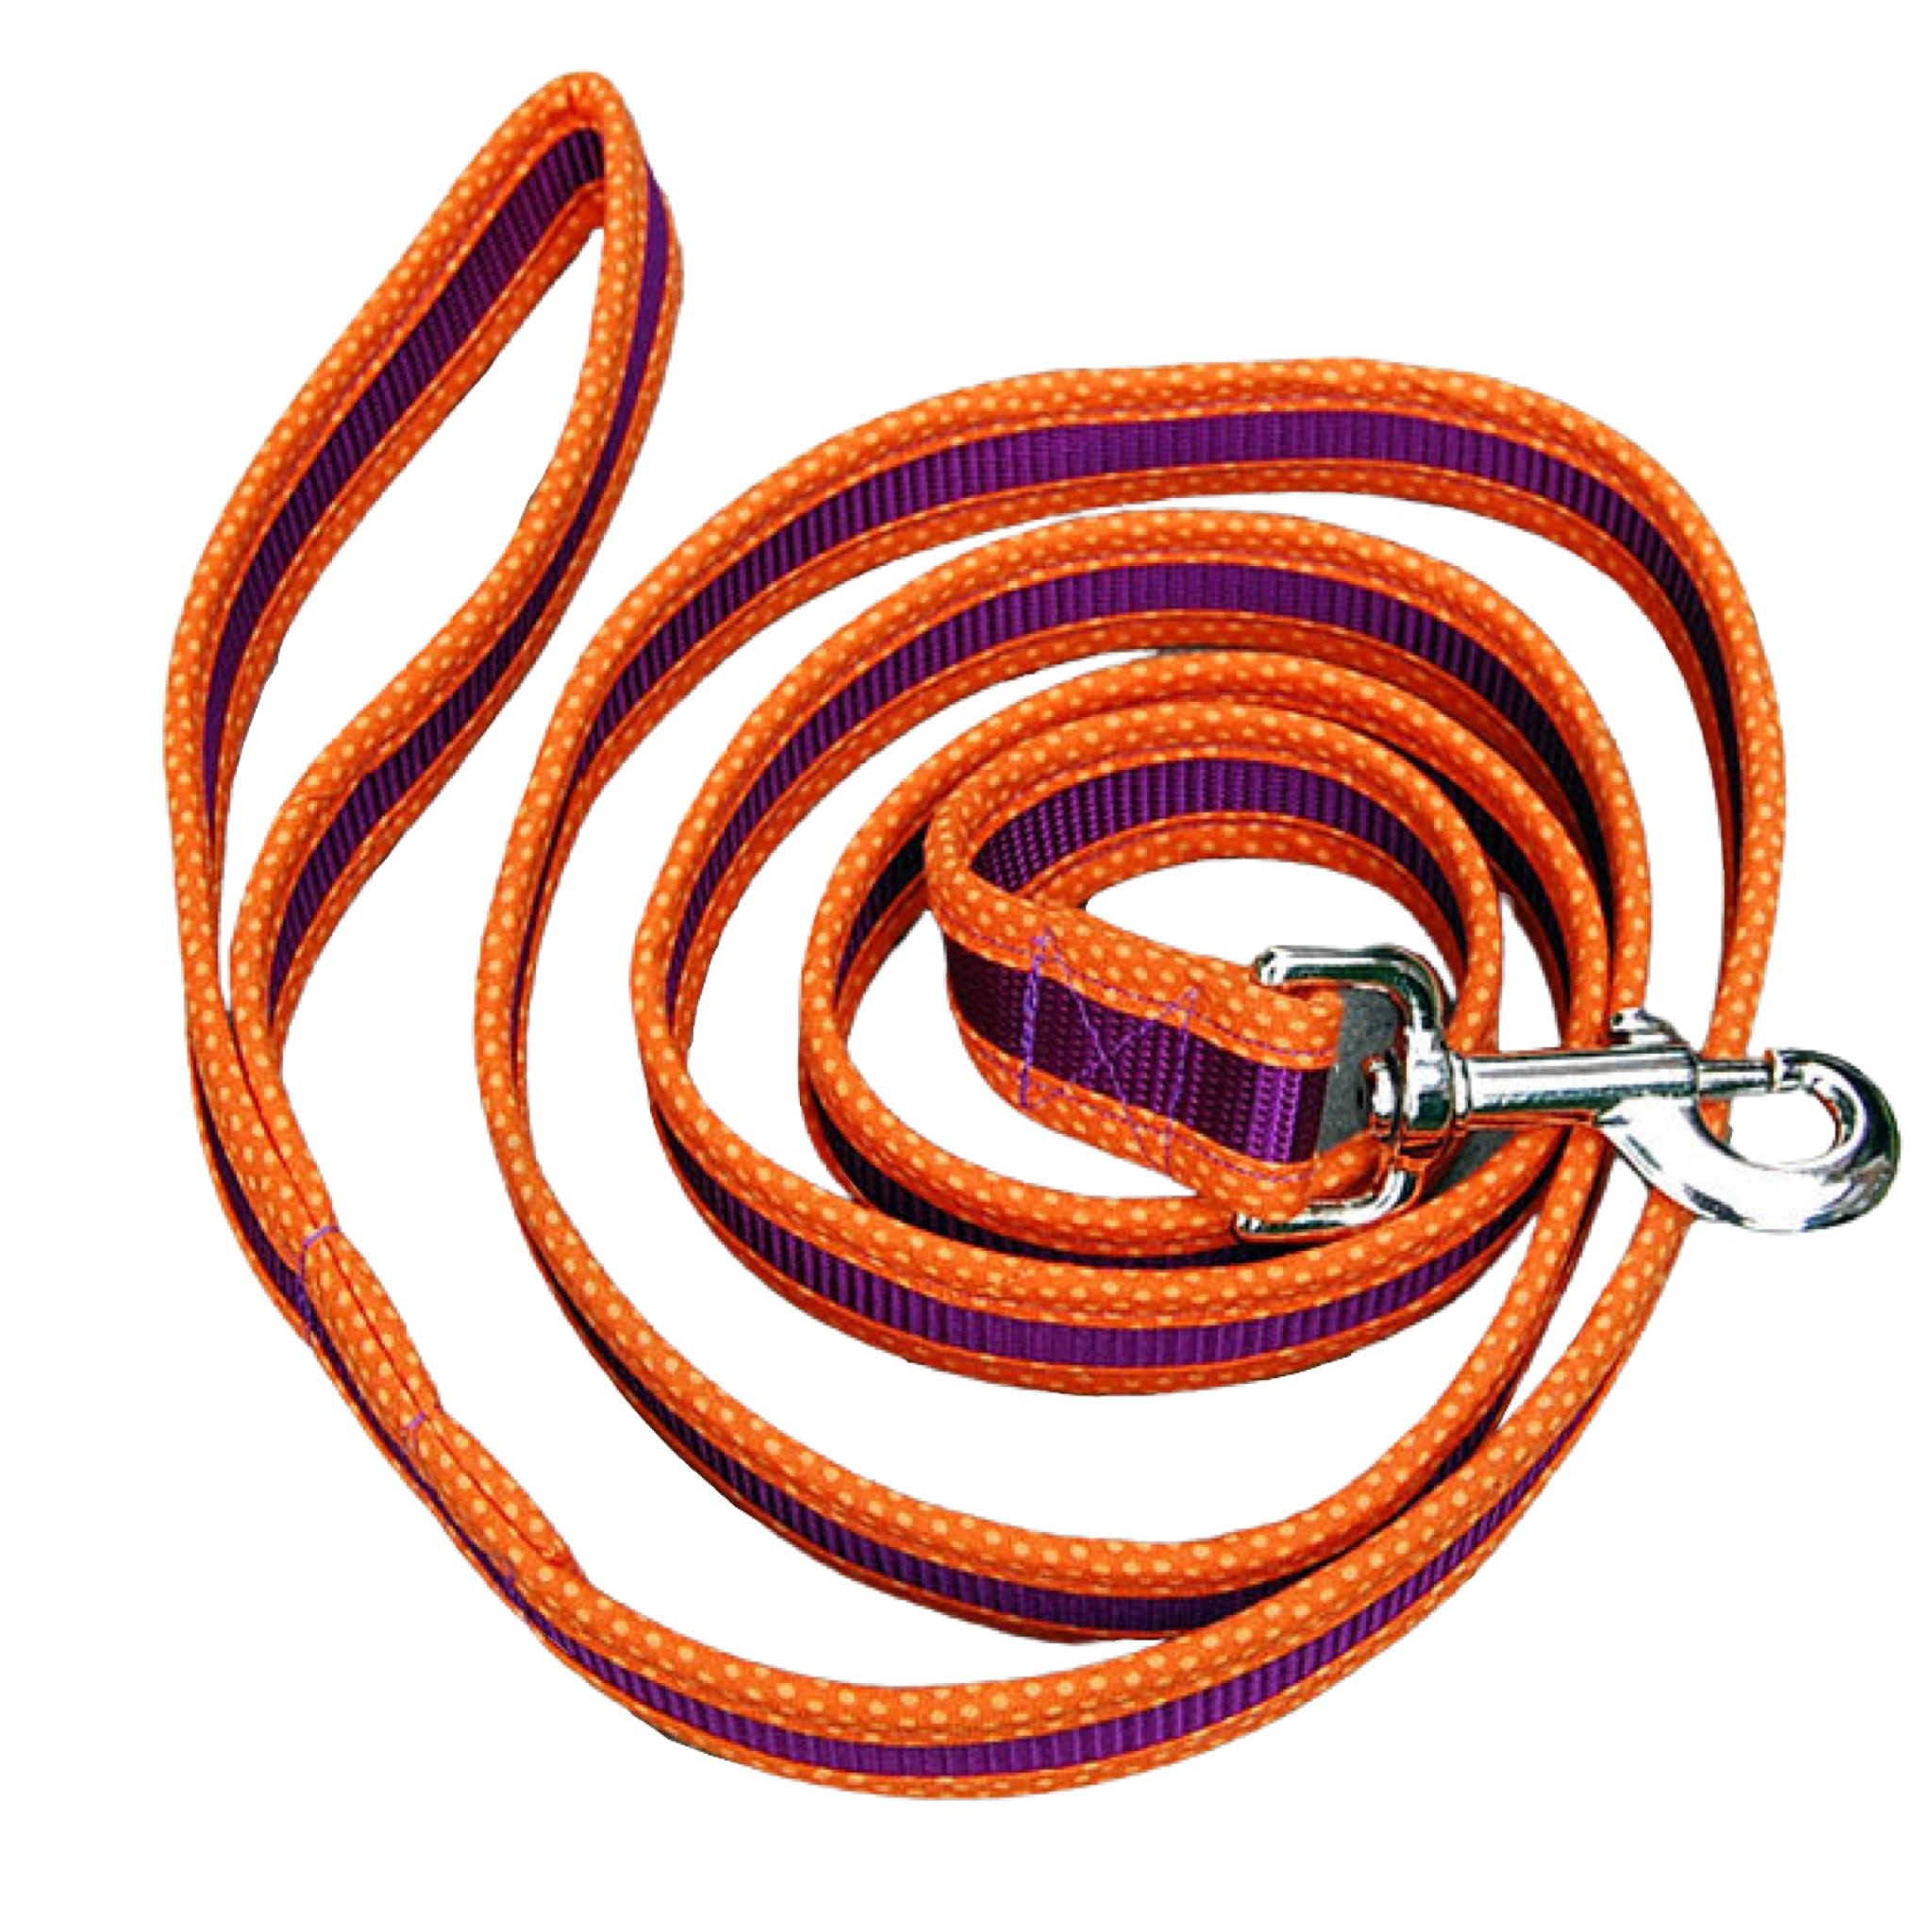 Dog Leash Orange&Purple